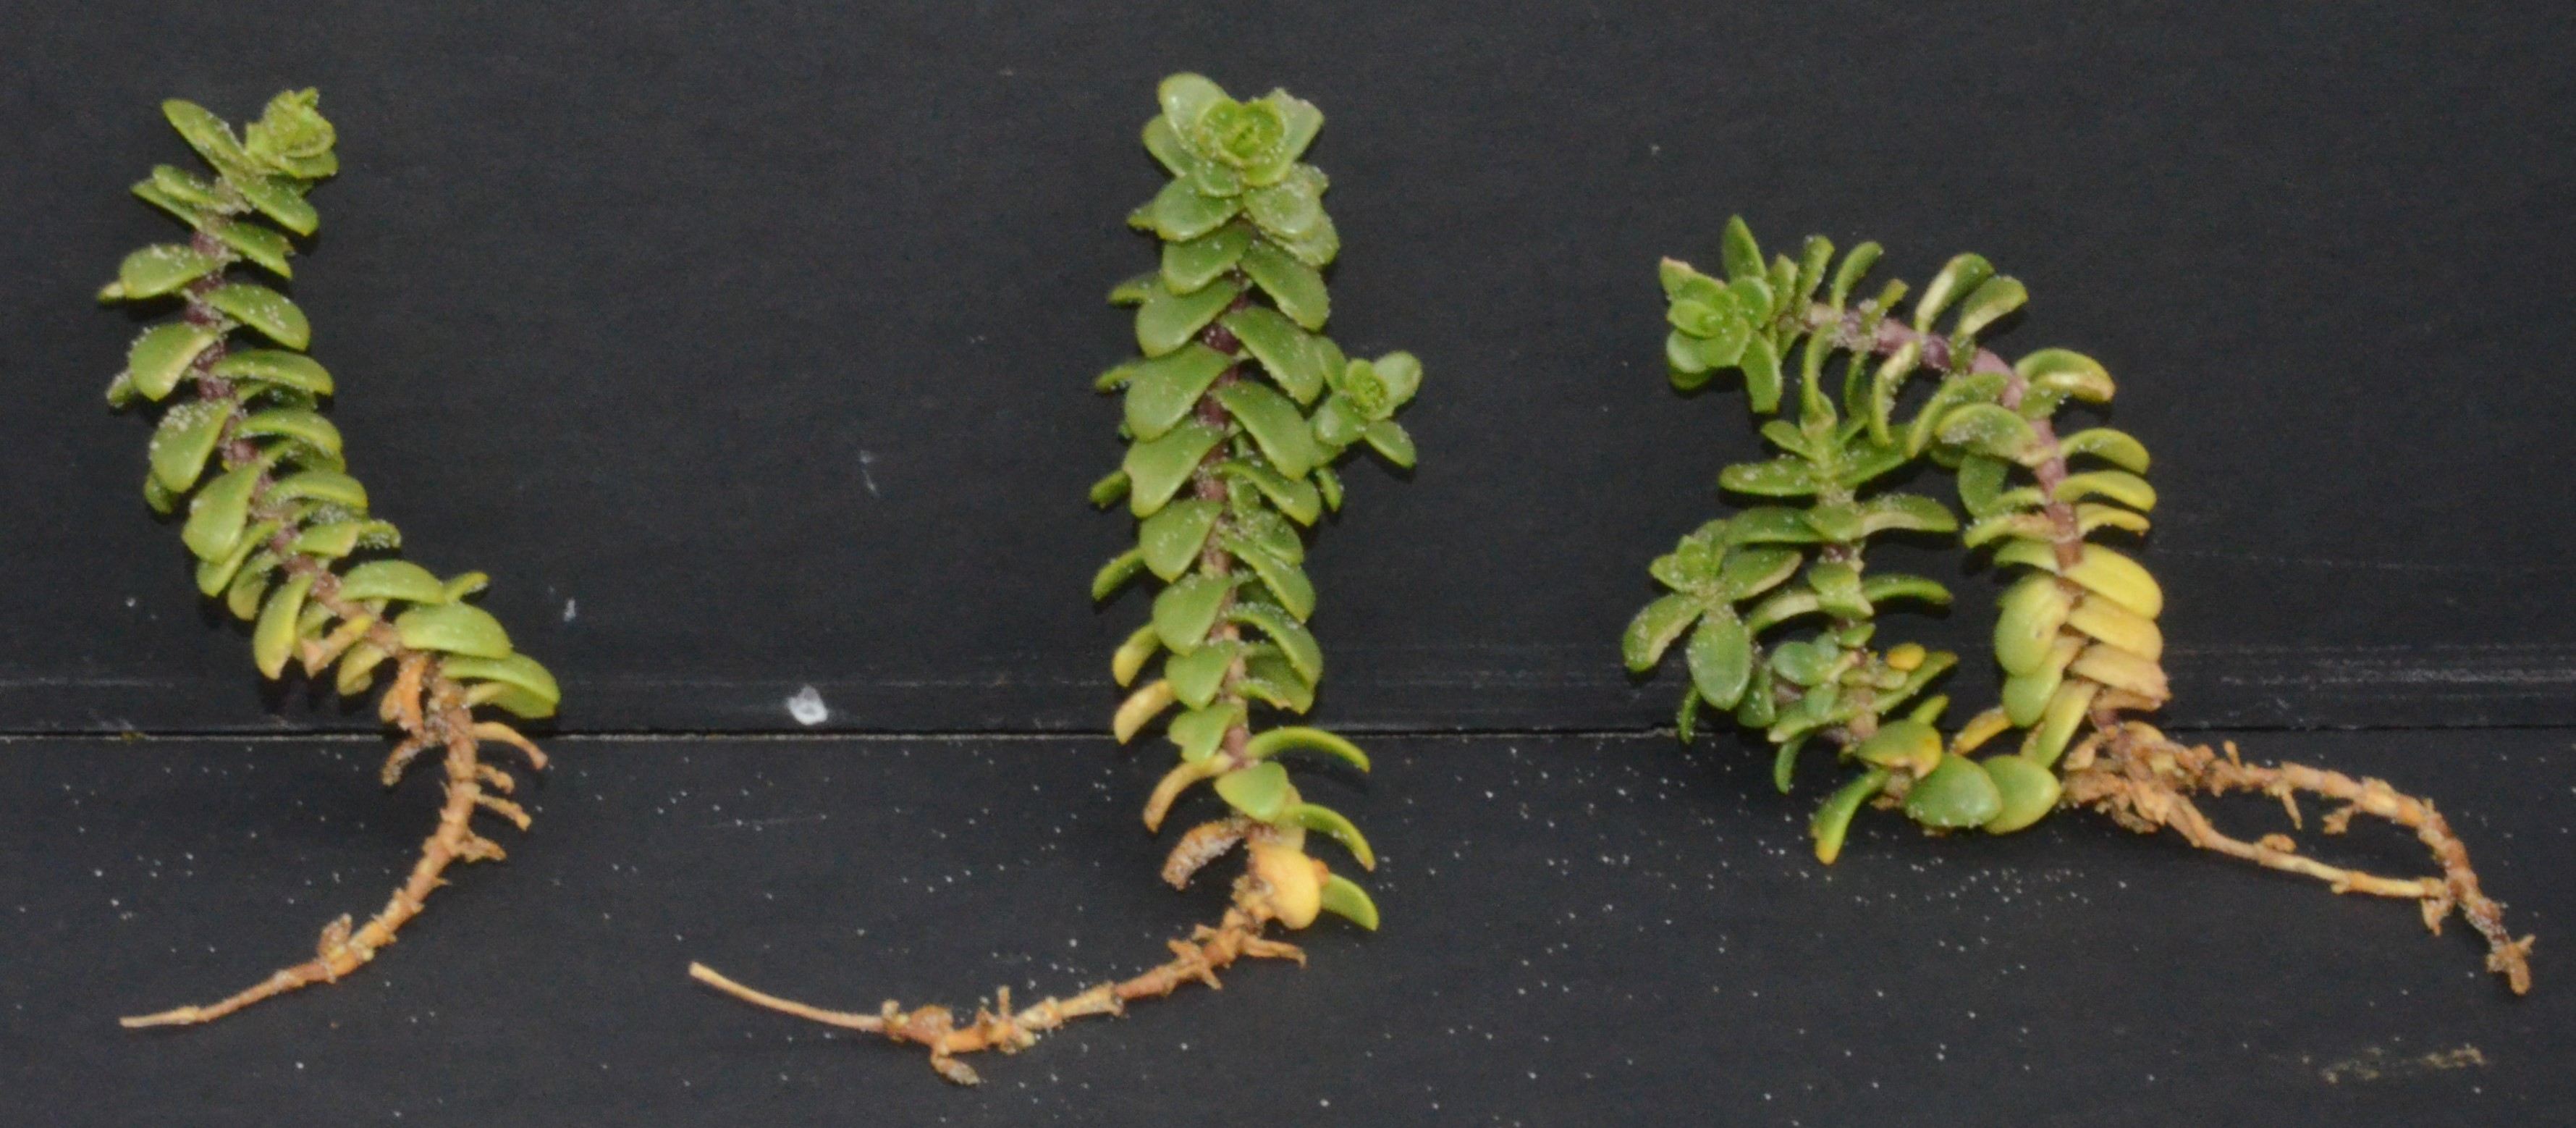 Honckenya peploides ssp. major stem cuttings.